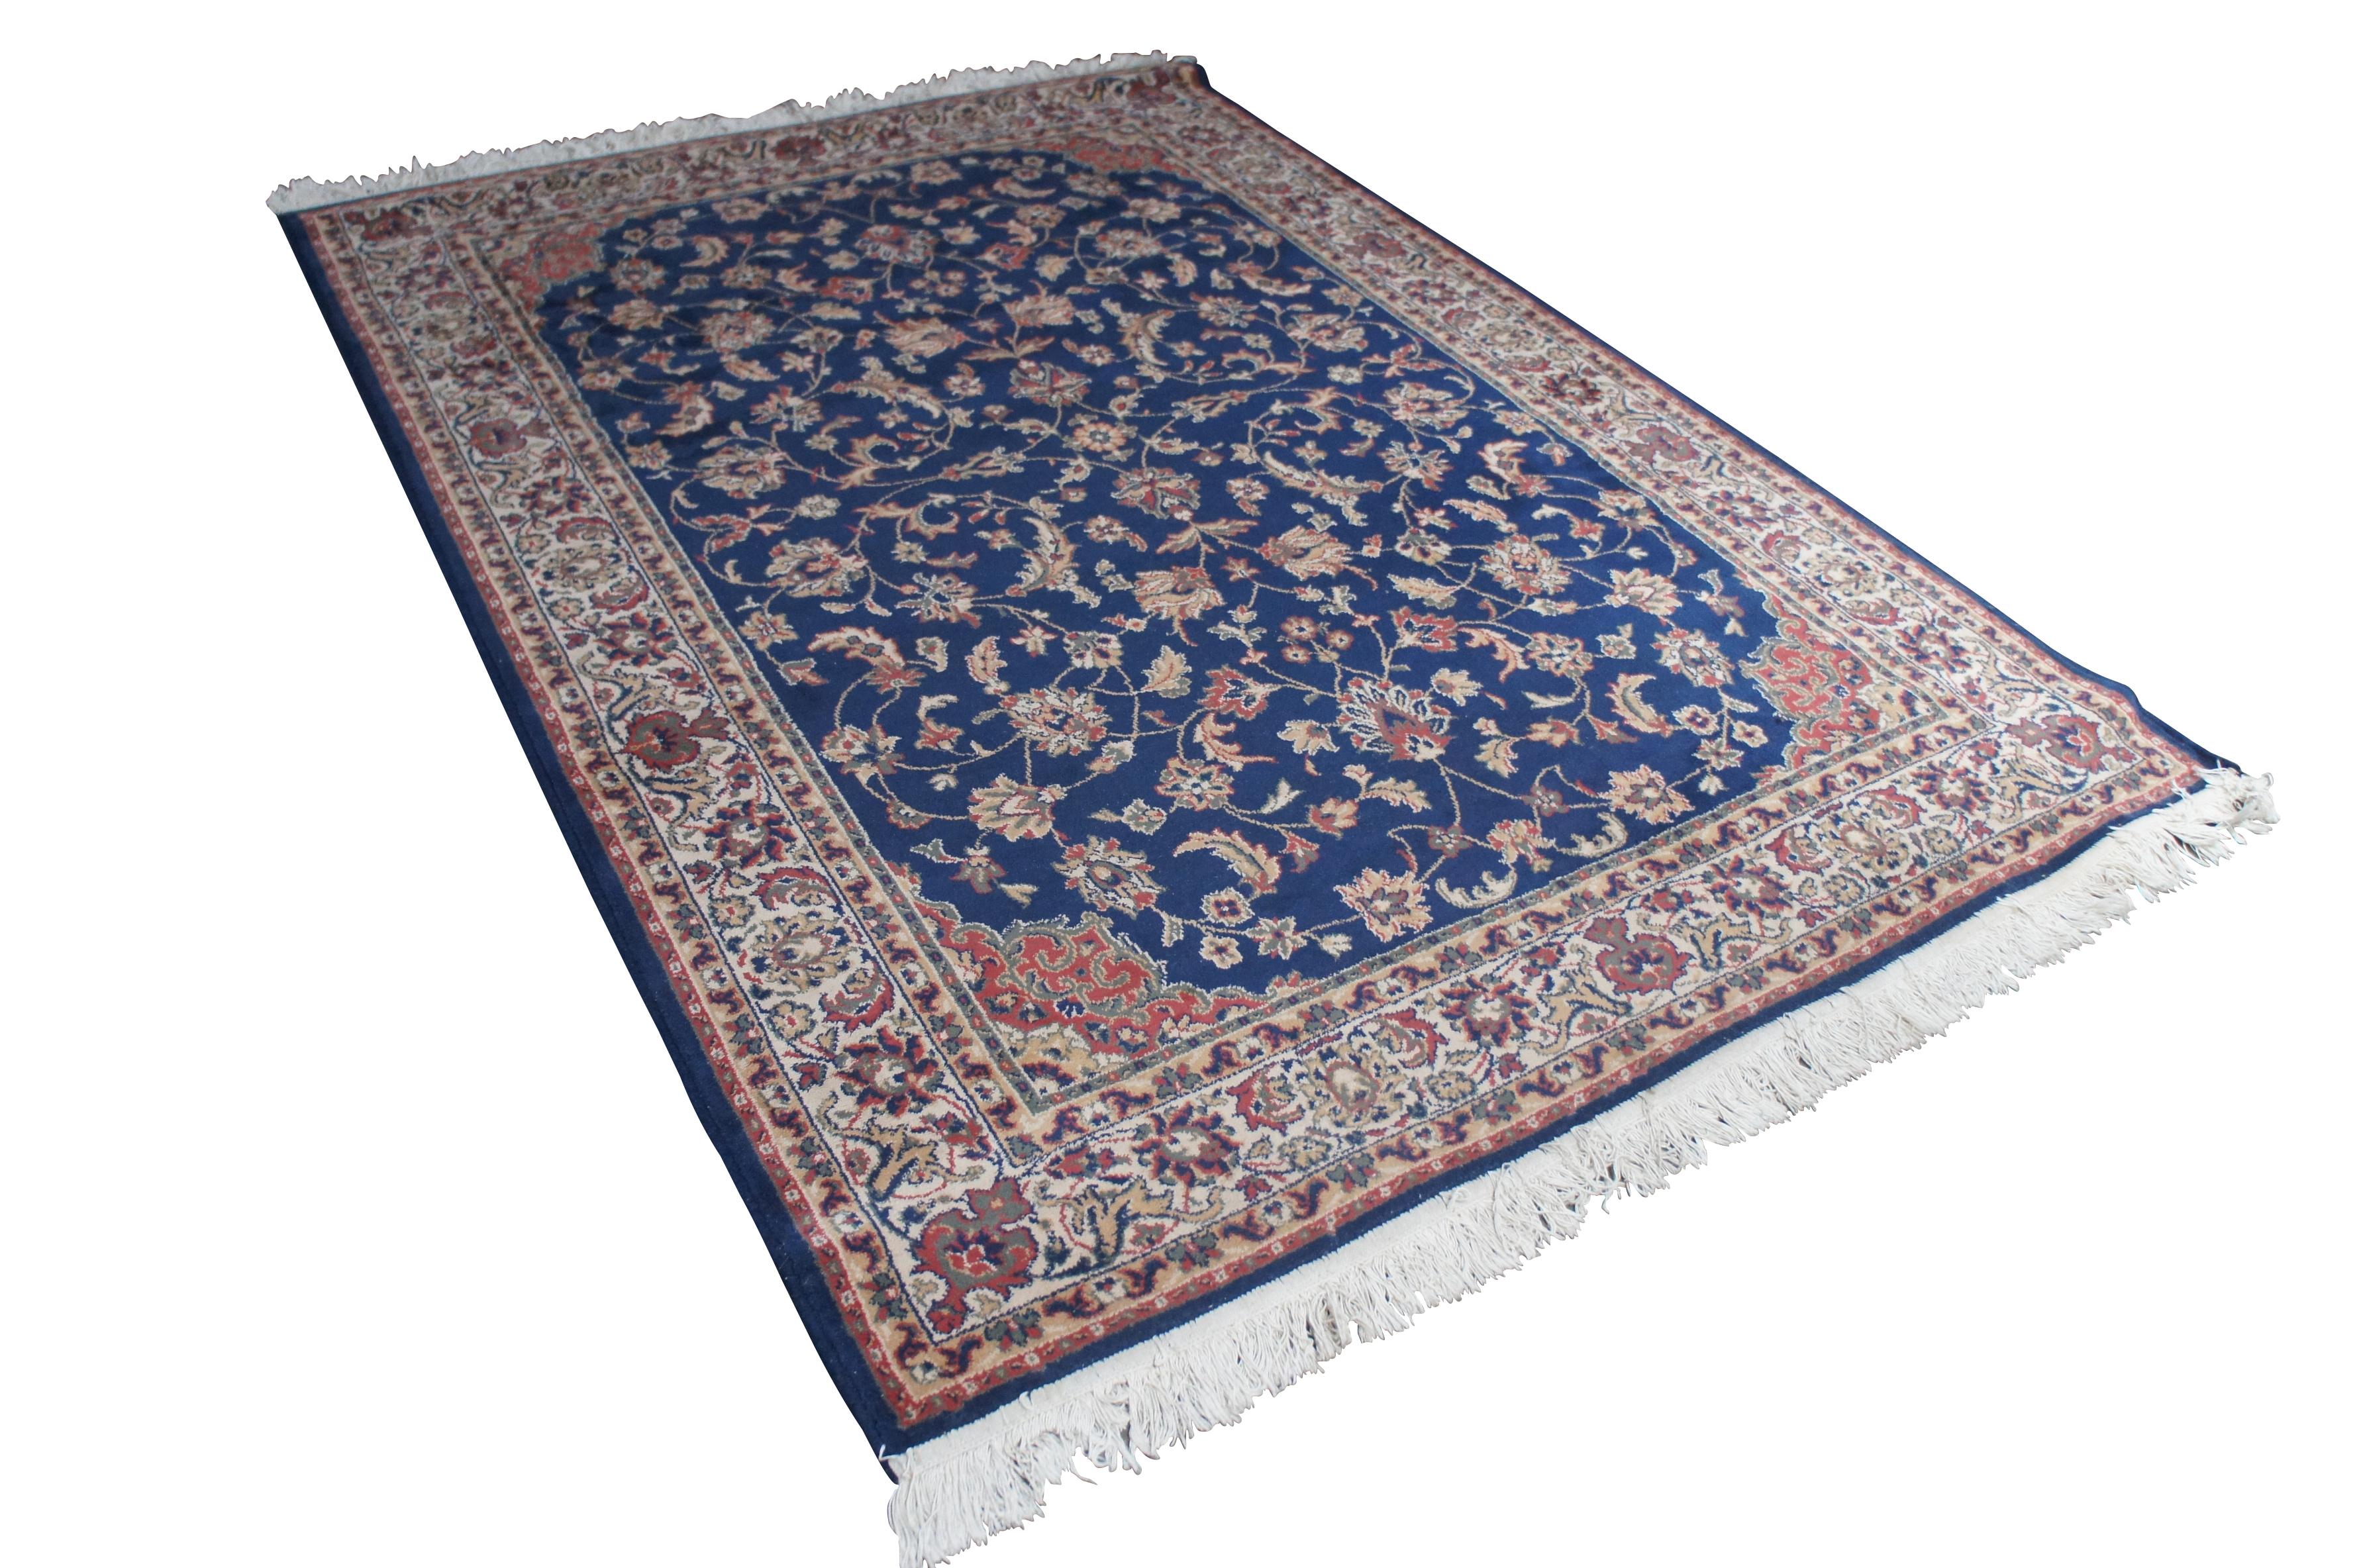 Sarouk Farahan Vintage Royal Persian Sarouk Navy Floral All Over Navy Area Rug Carpet 5' x 8' For Sale